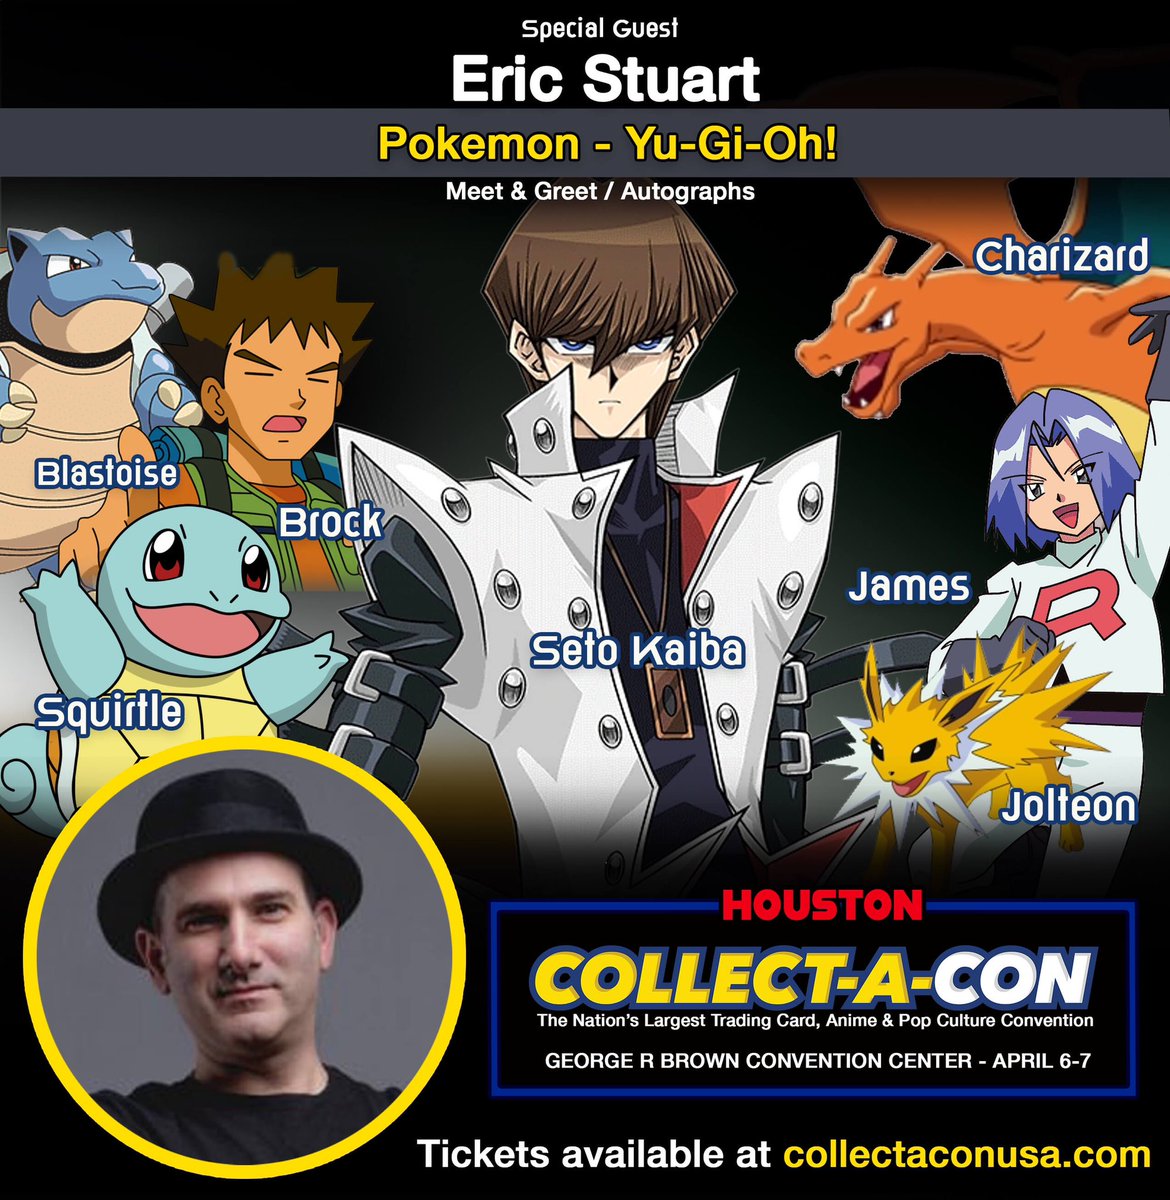 Meet Eric Stuart in Houston, the voice of Seto Kaiba, James, Brock, and more! #pokemon #yugioh #setokaiba #charizard #houston @ericstuartband